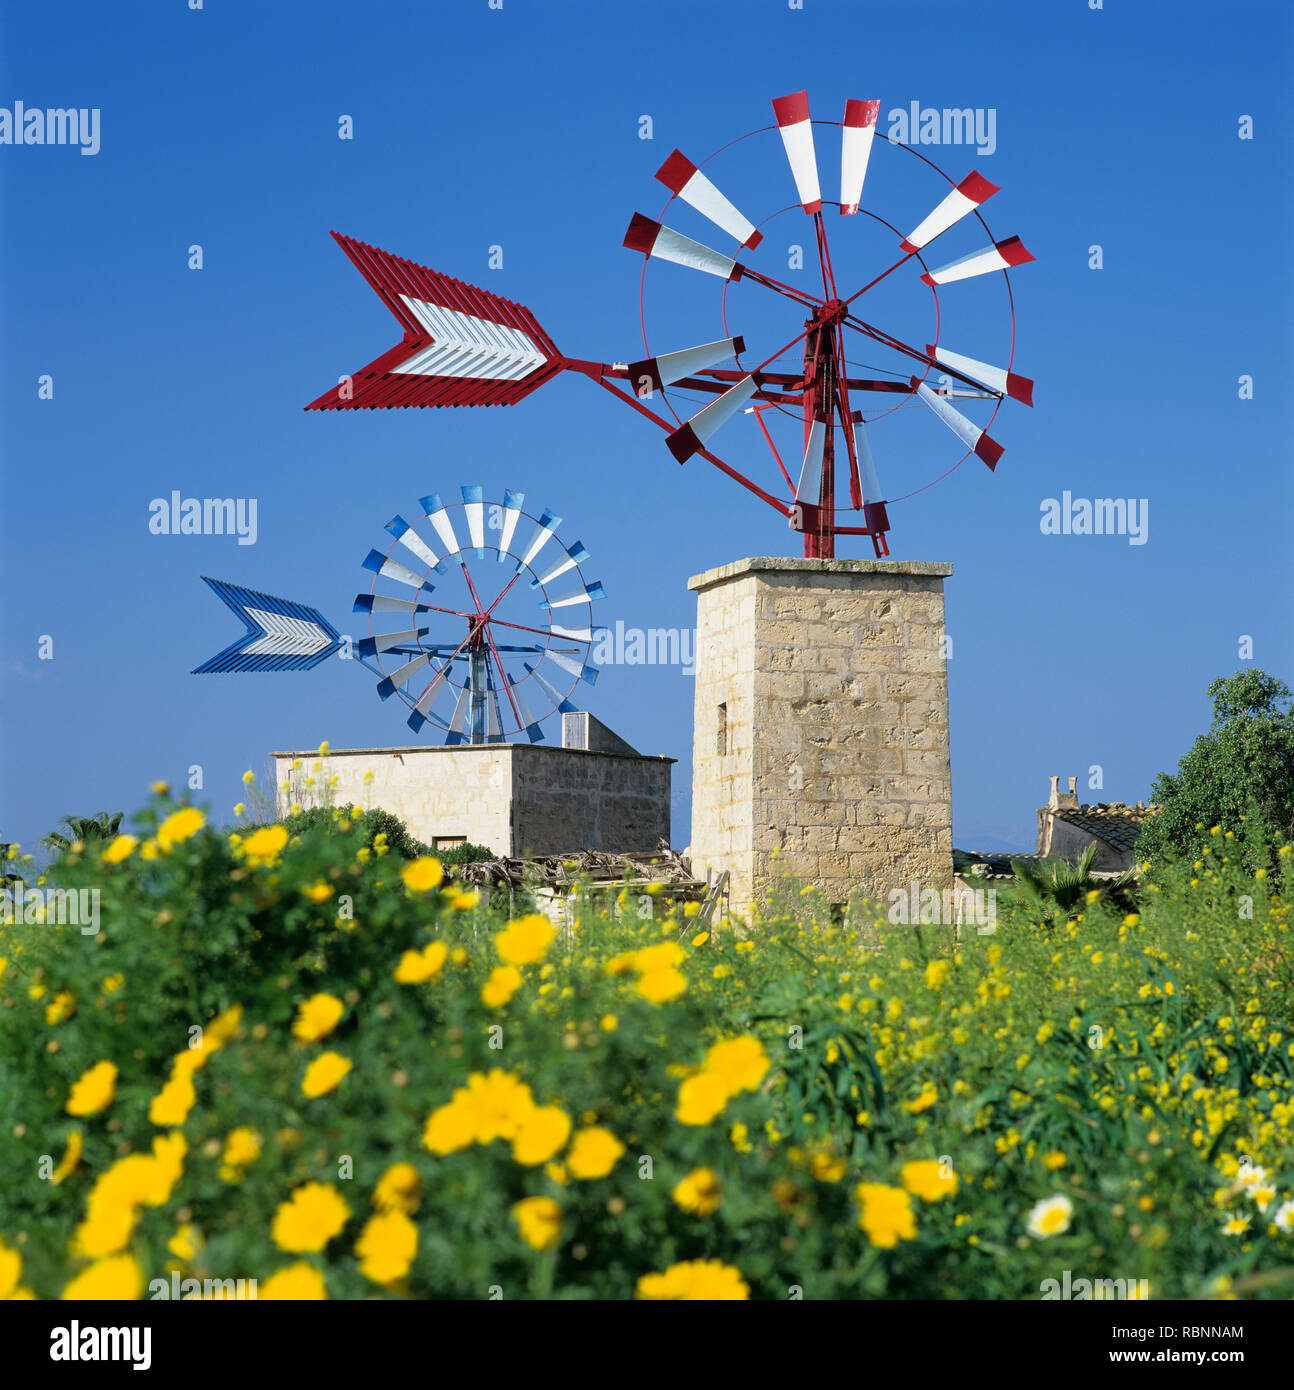 Colorido granja de molinos de viento cerca del aeropuerto de Palma de Mallorca con las flores de la primavera, Can Pastilla, Mallorca (Mallorca), Islas Baleares, España, Europa Foto de stock